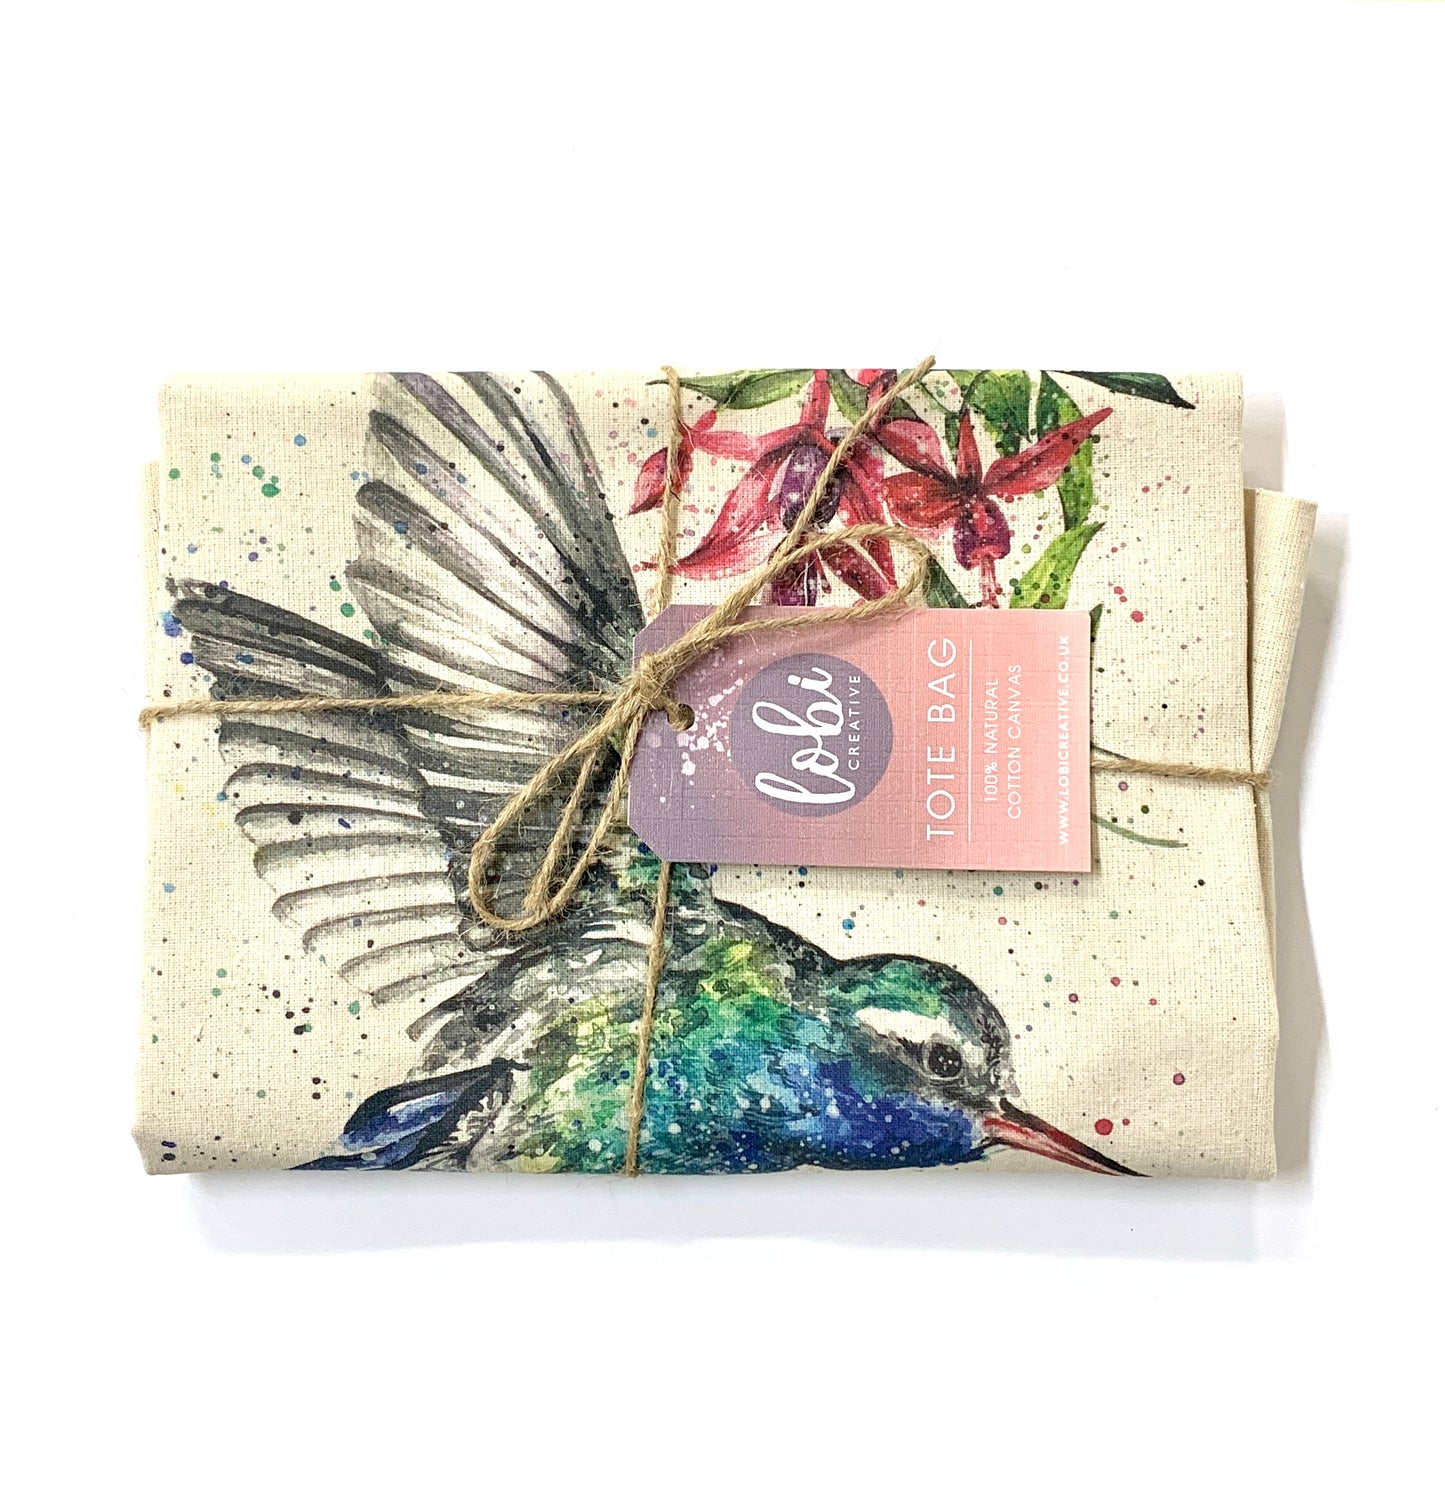 Watercolour Hummingbird Cotton Tote Bag